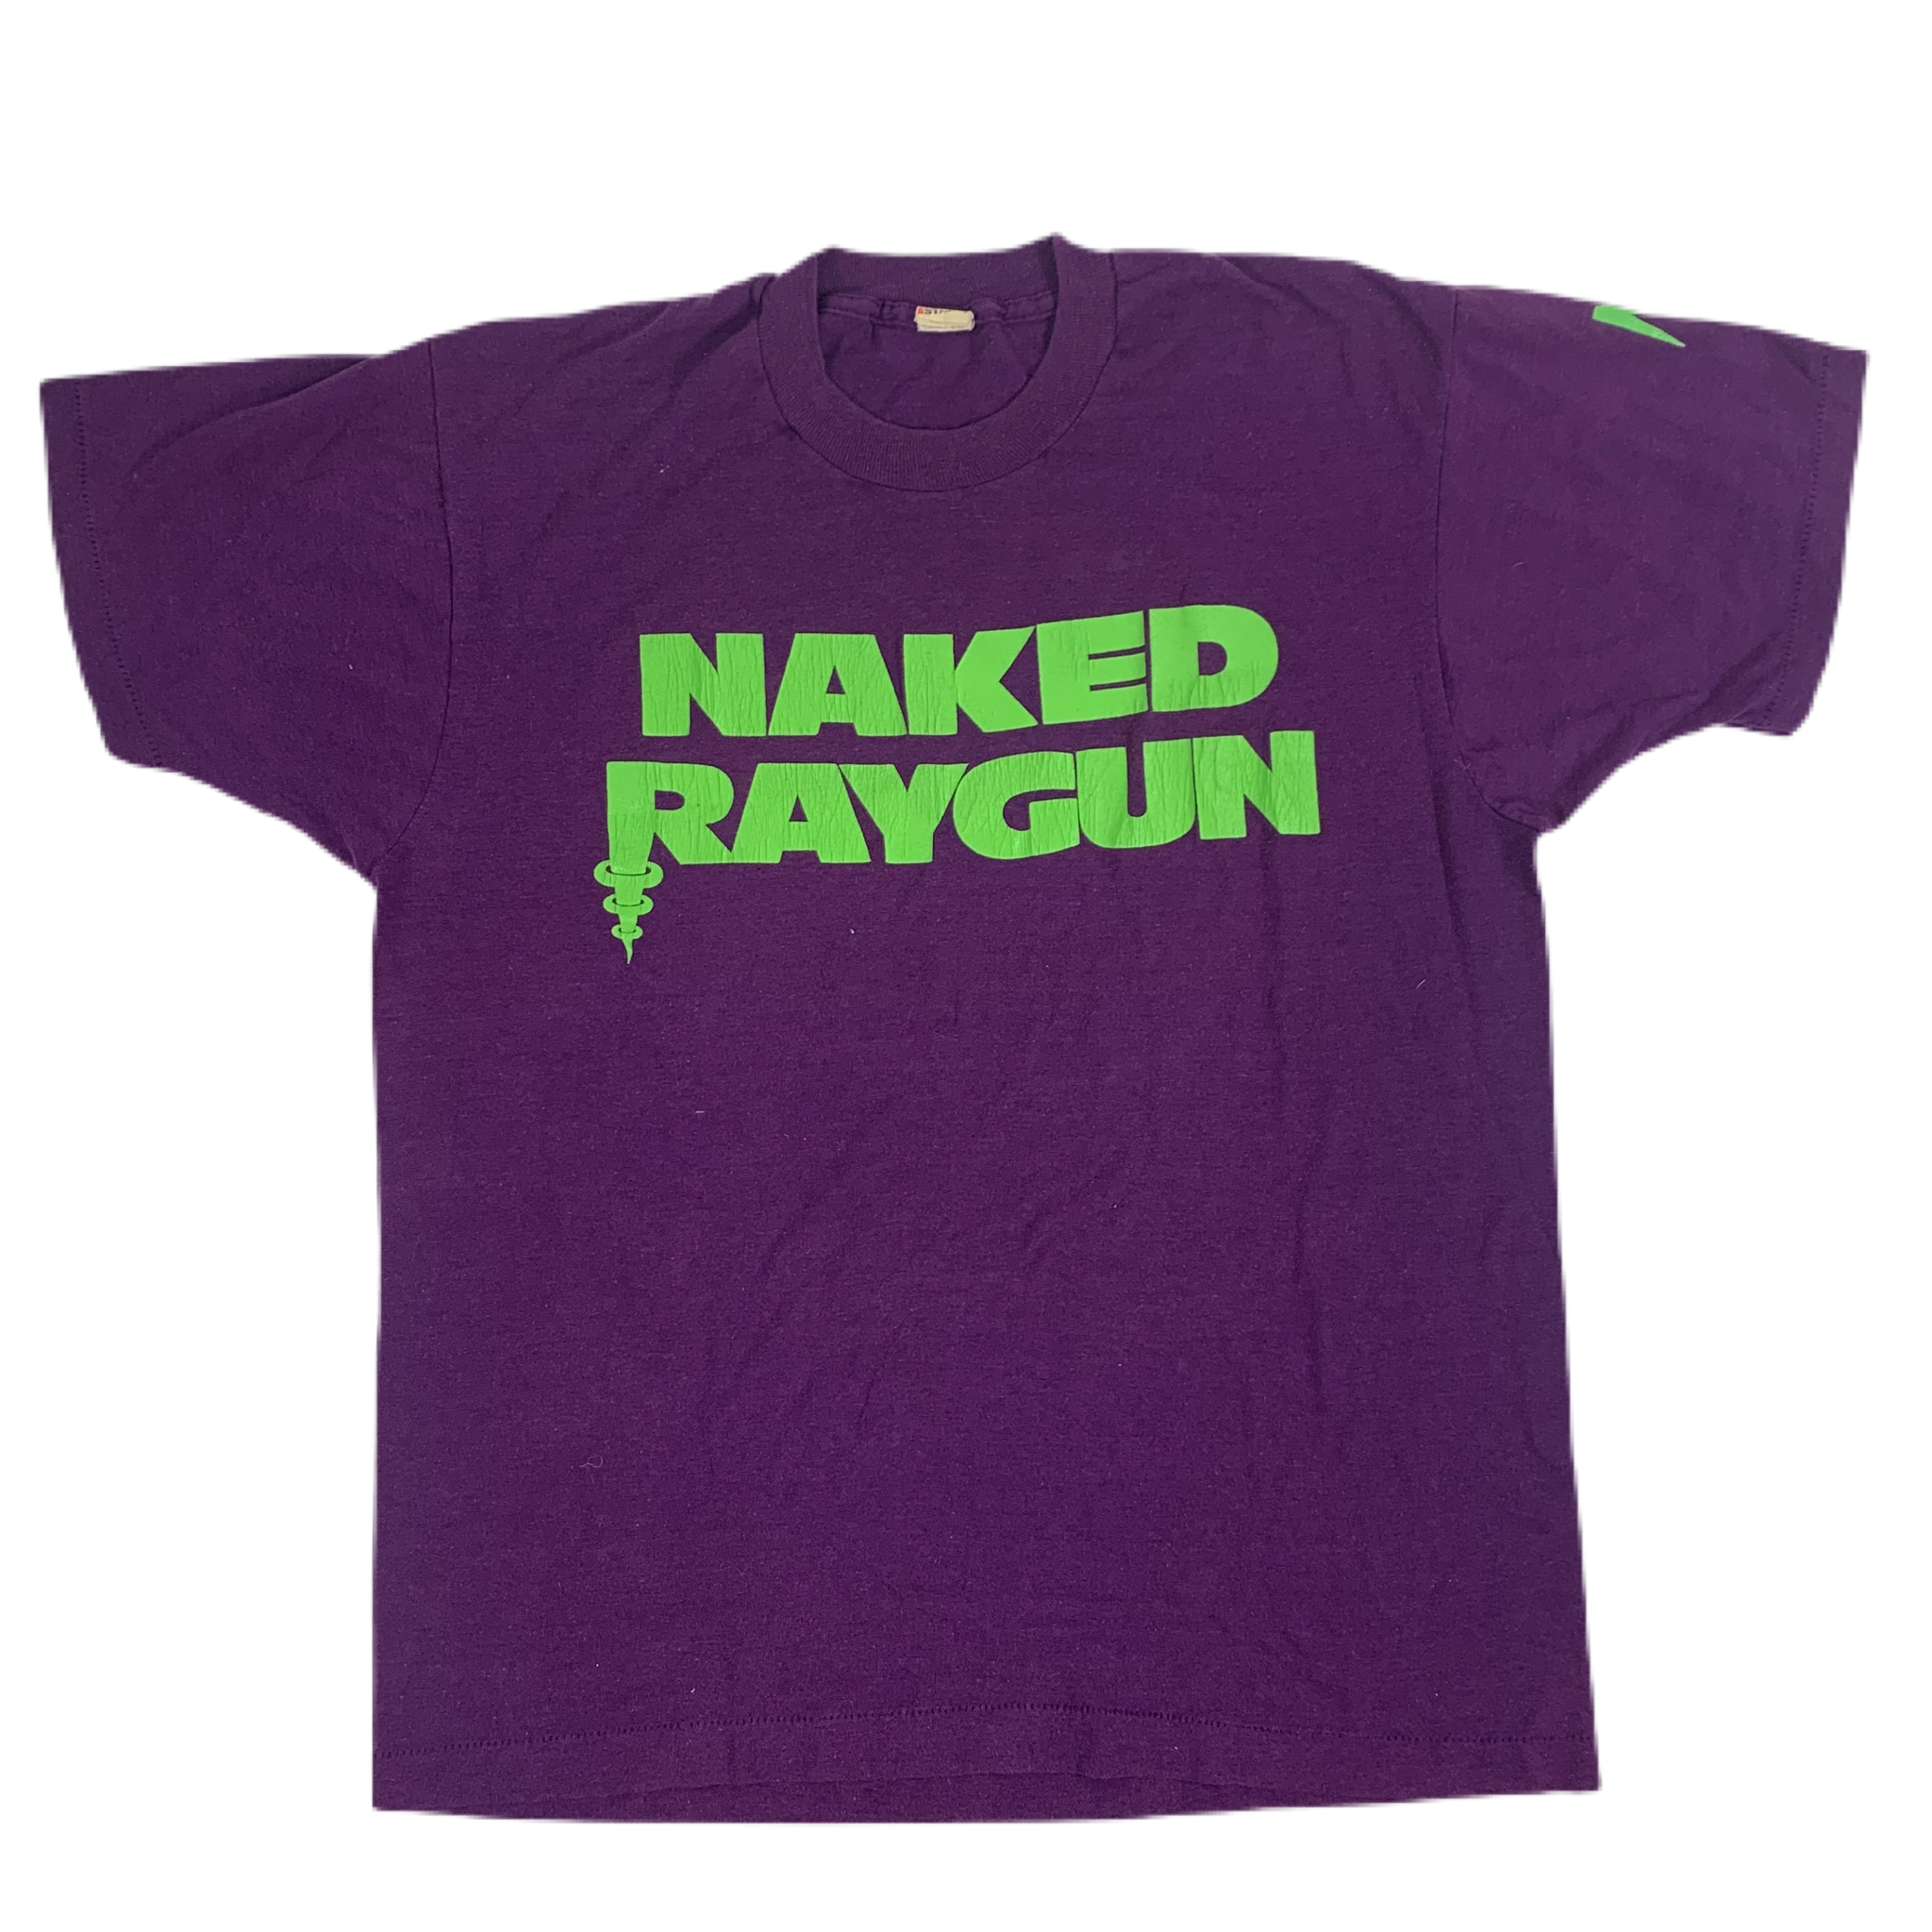 Vintage Naked Raygun 